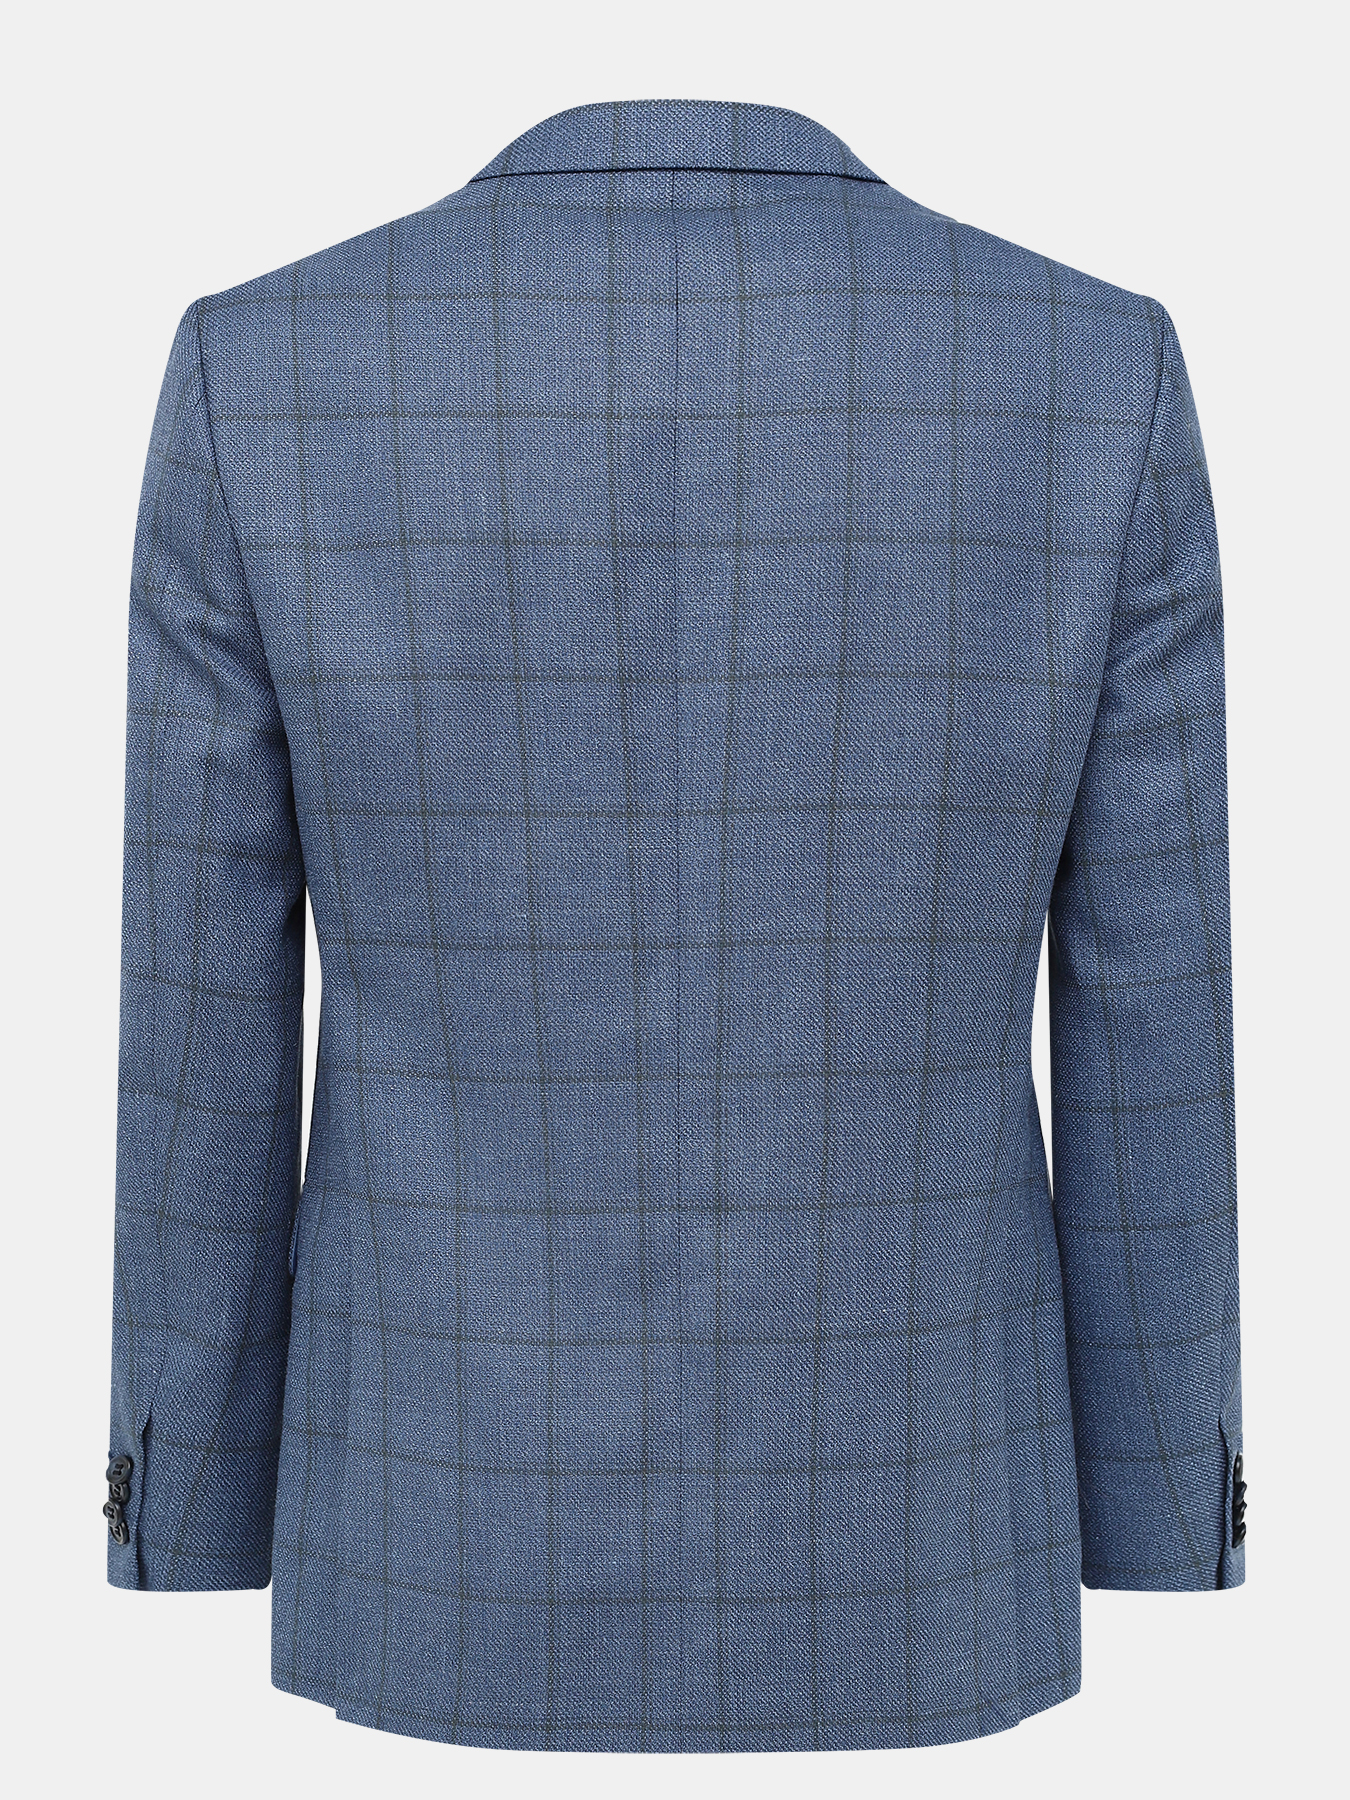 Пиджак Alessandro Manzoni 421118-379, цвет синий, размер 58 - фото 4